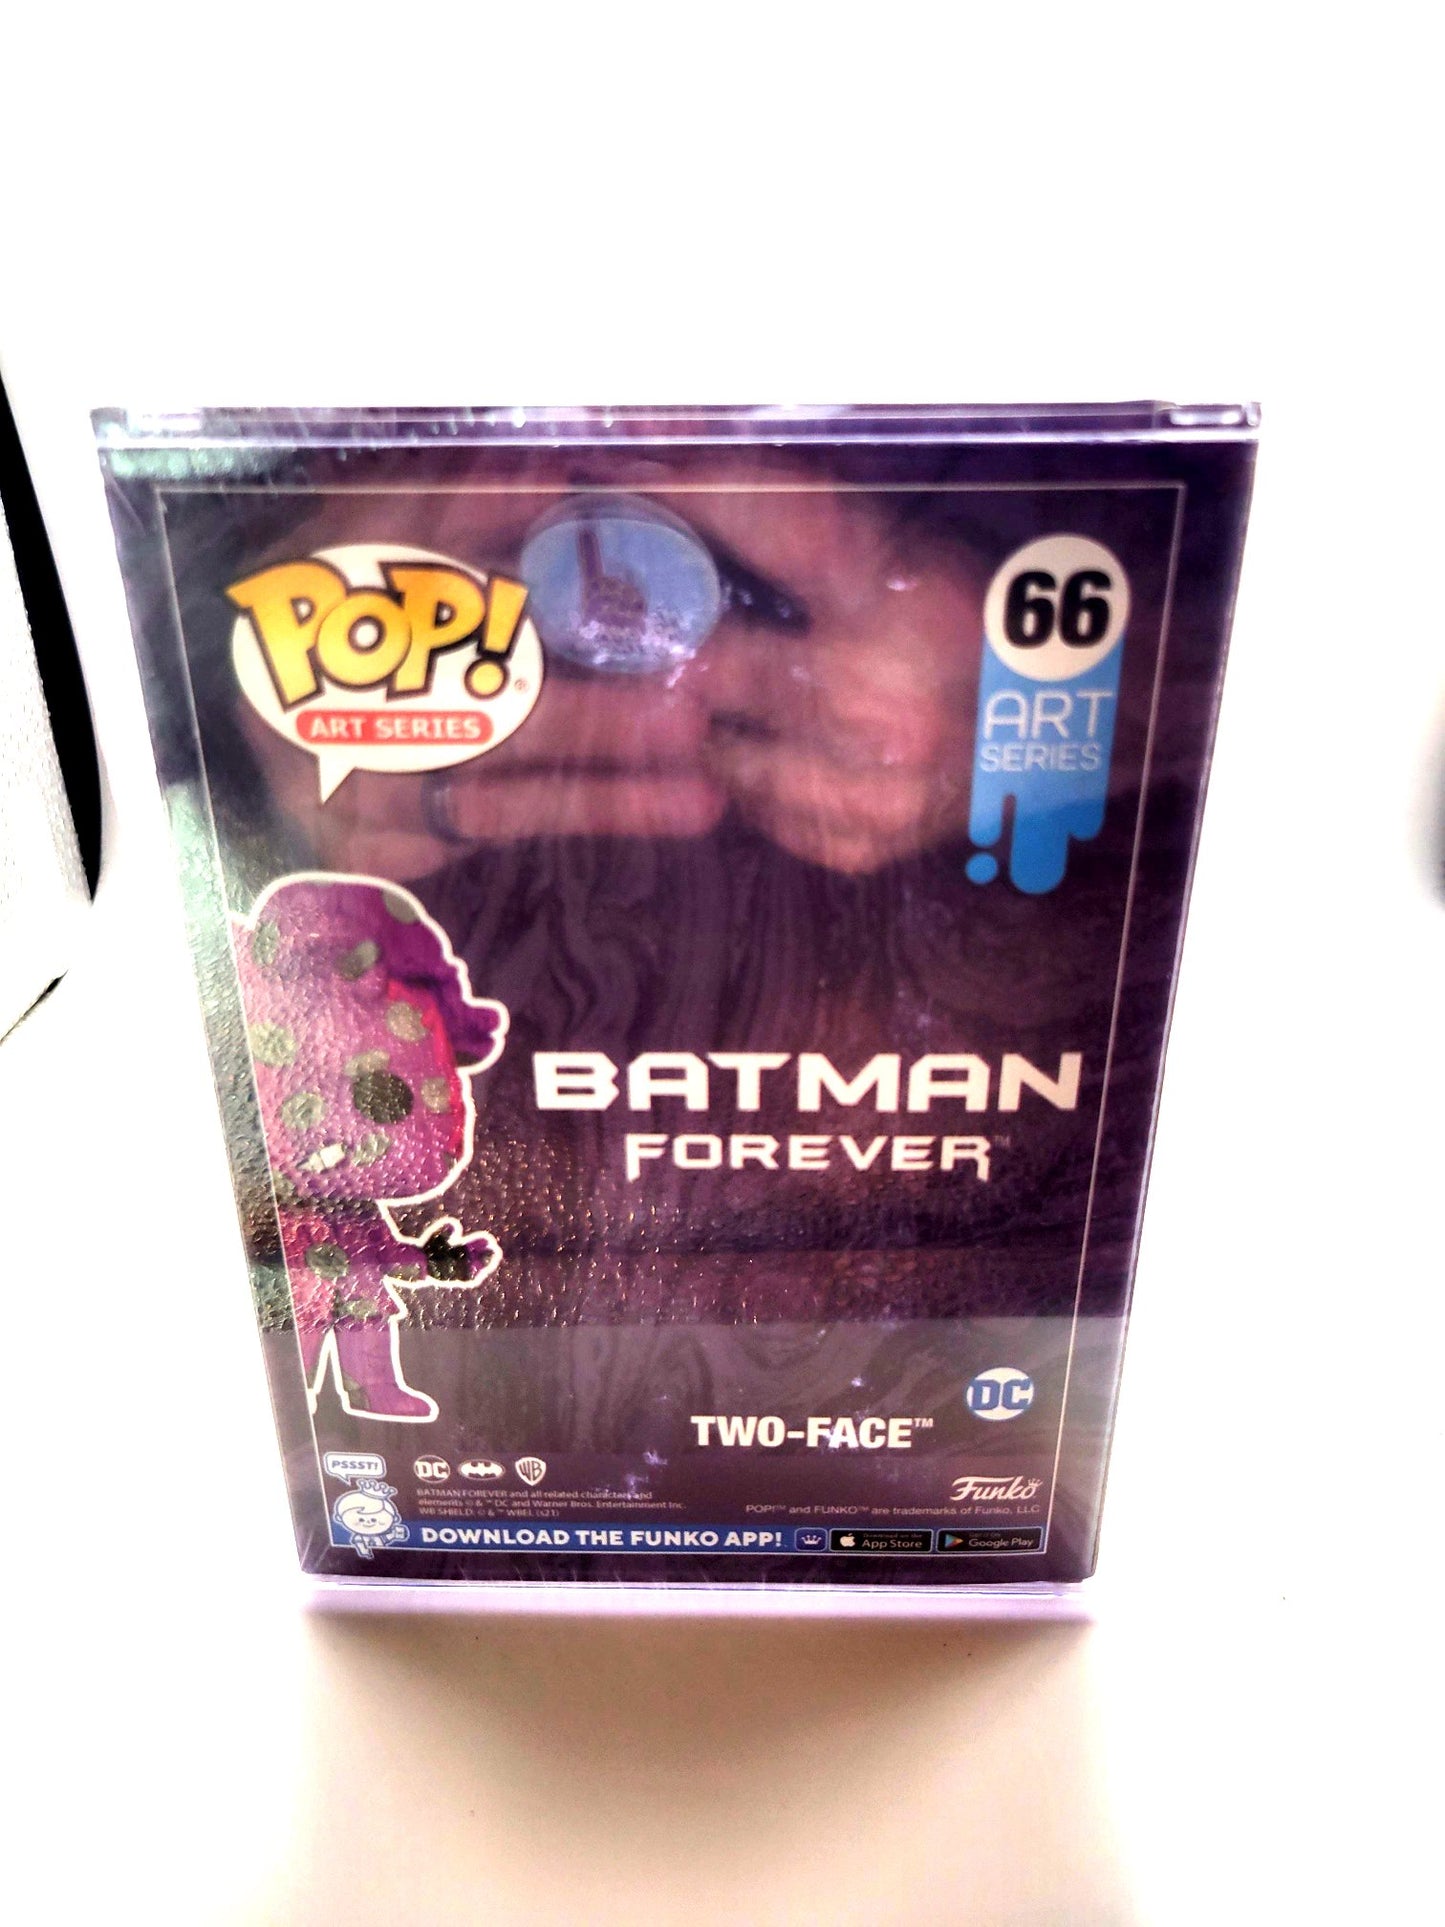 Funko Batman Forever Art Series Target Exclusive Two-Face POP Figure 66